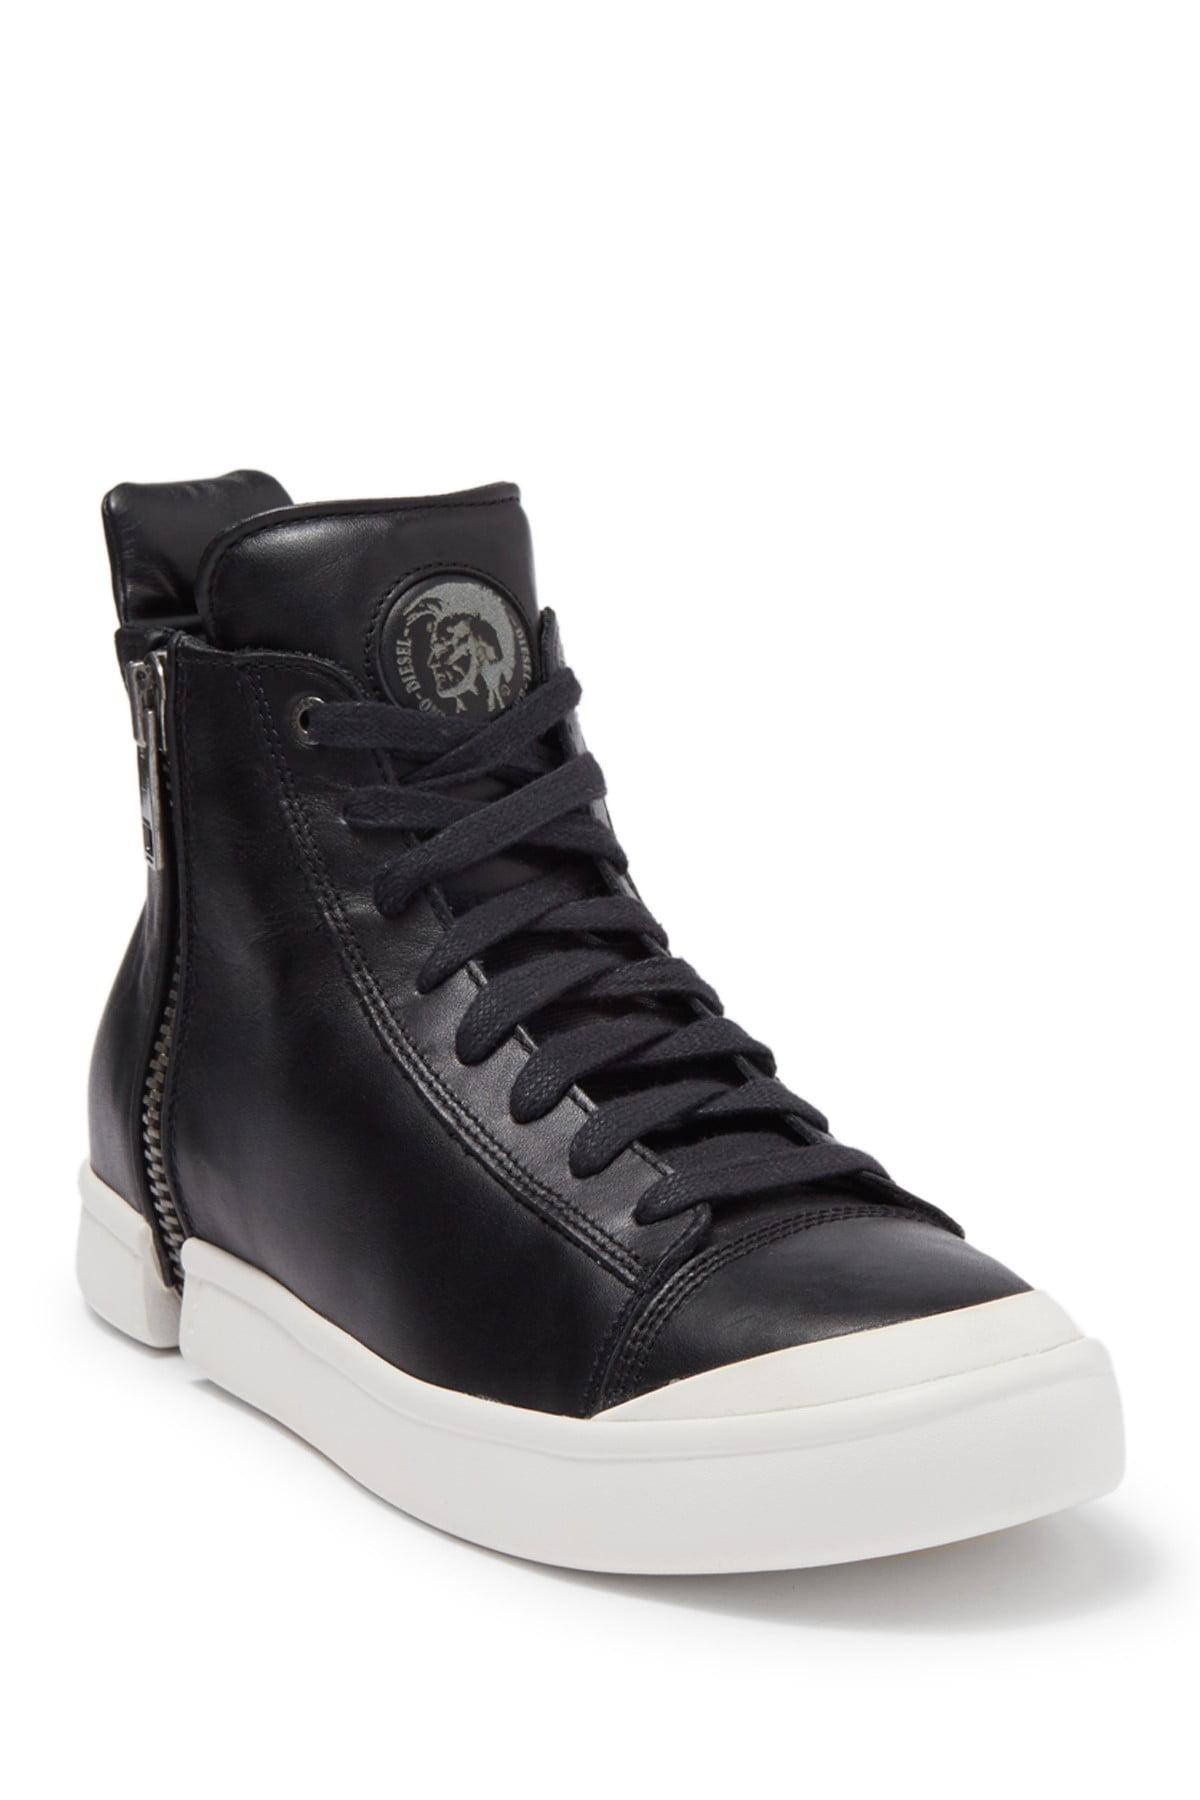 DIESEL Nentish Zip Around High Top Leather Sneaker in Black for Men - Lyst